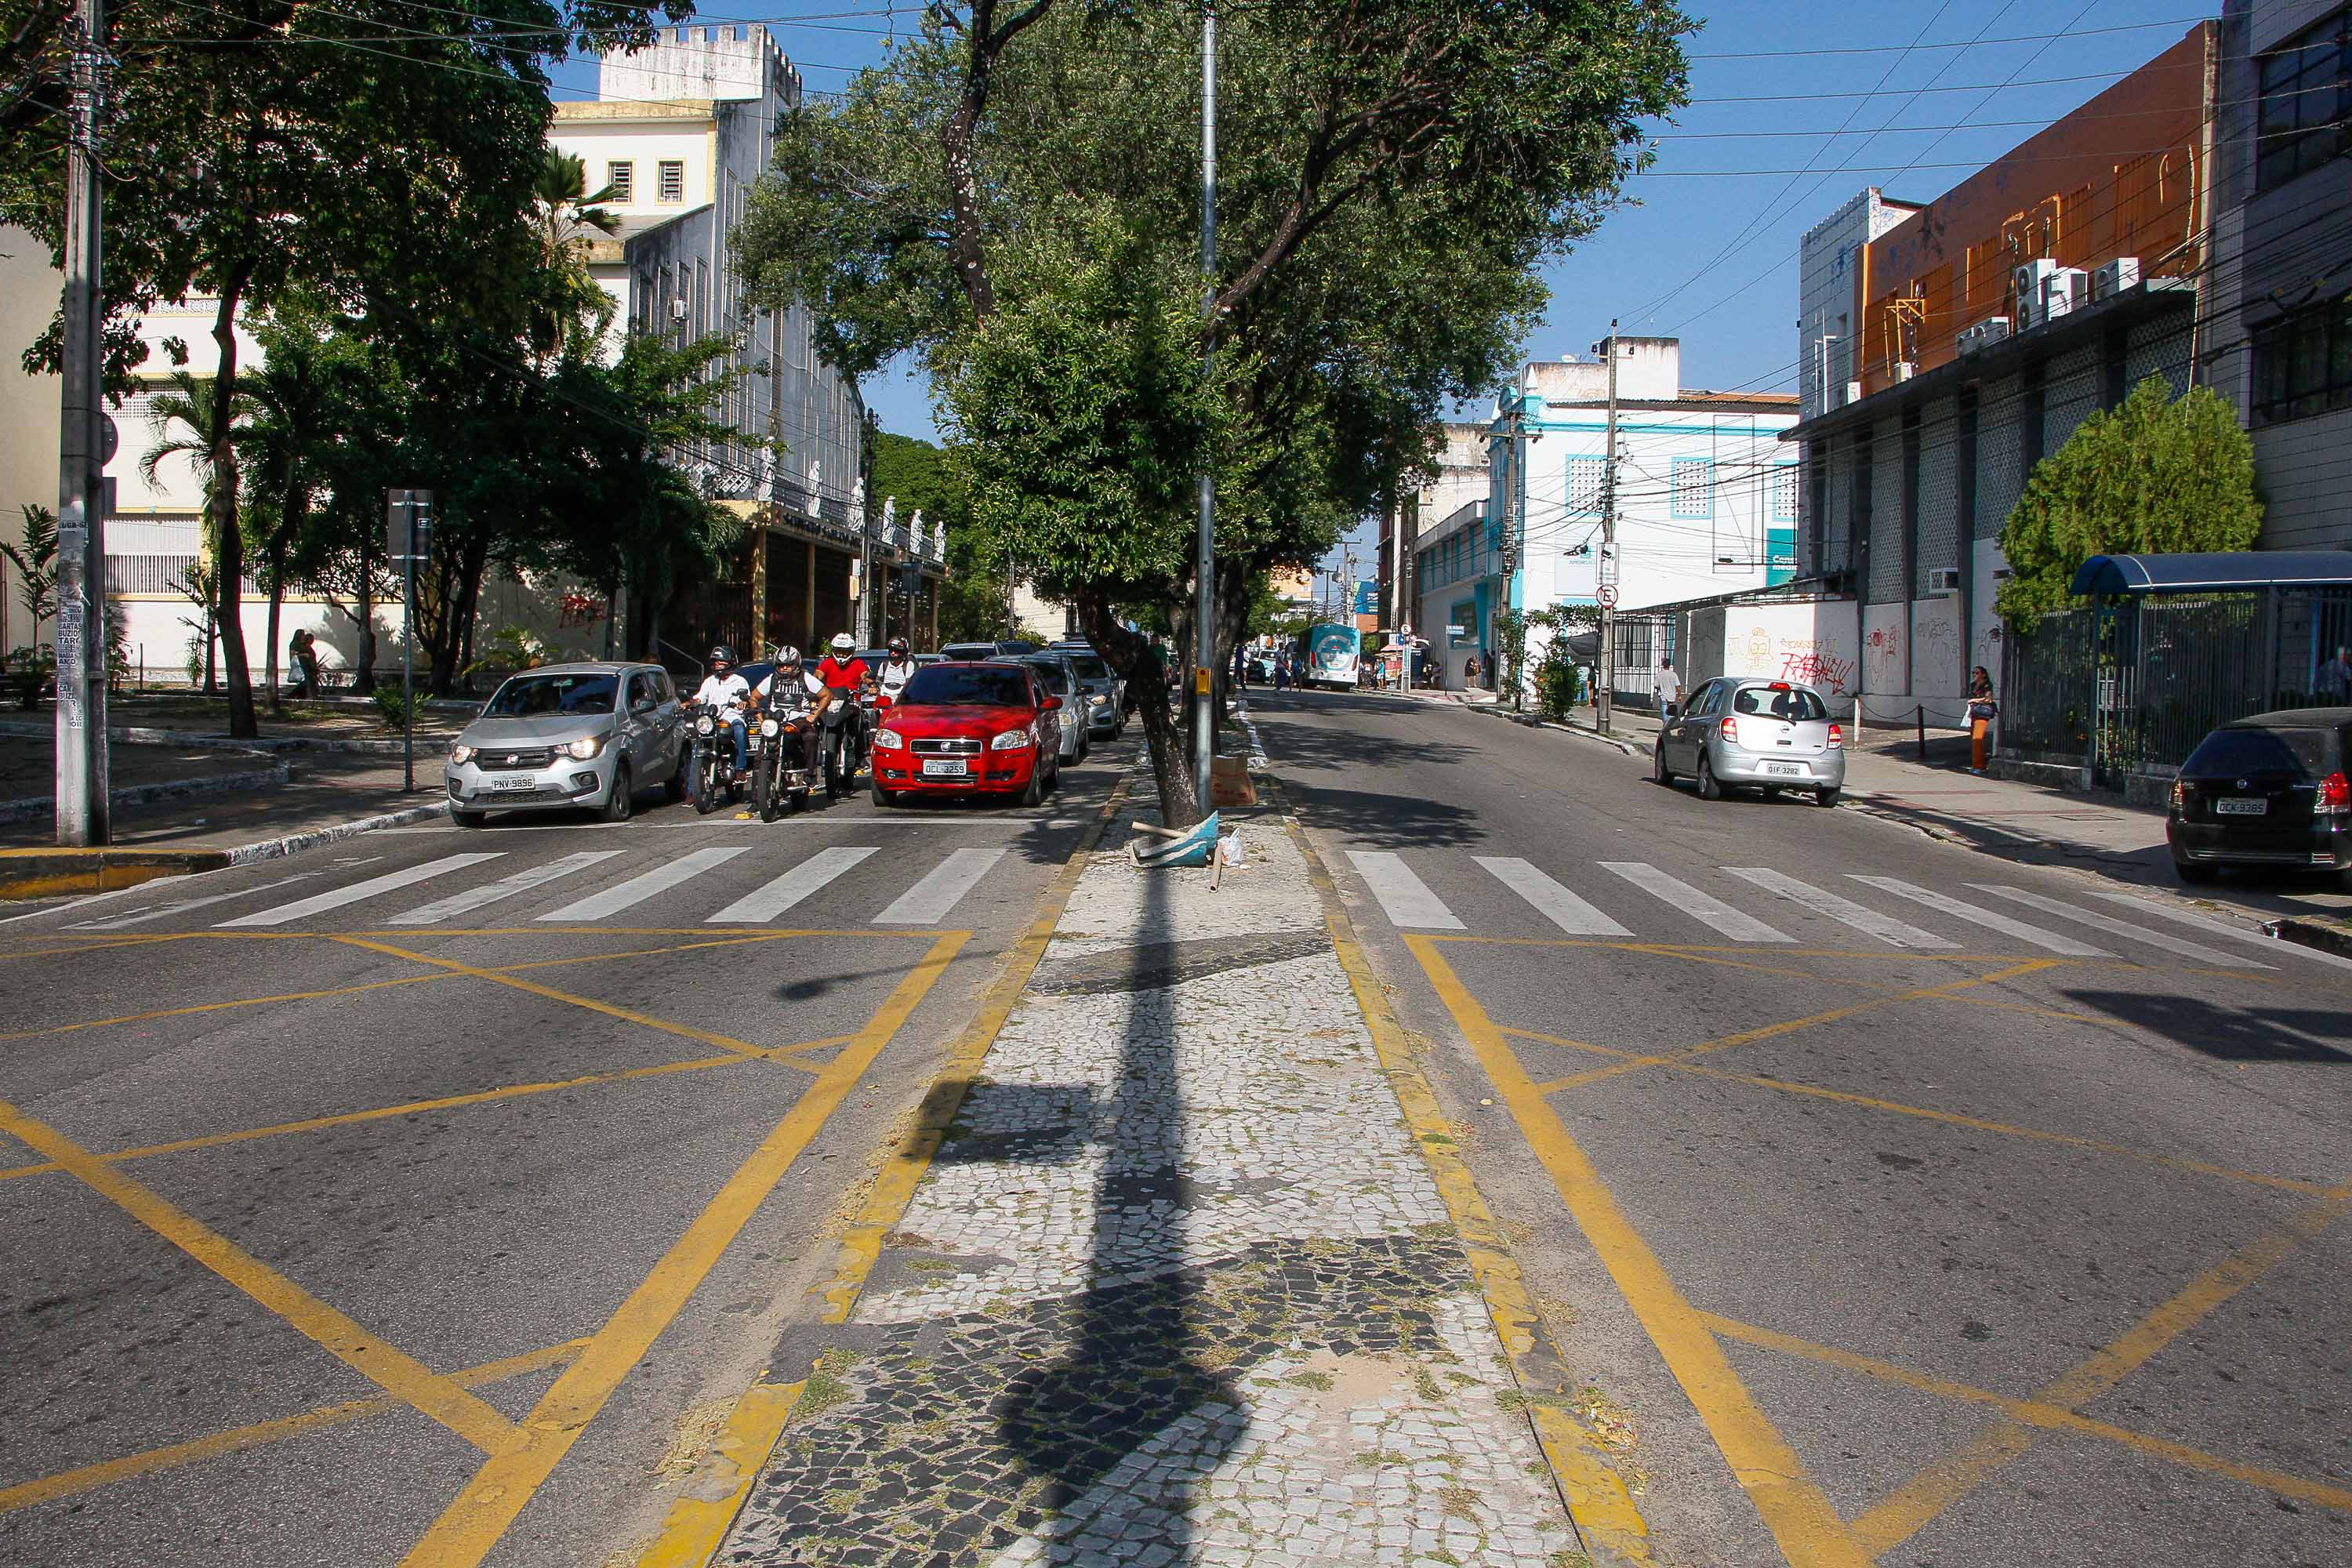 Avenida com canteiro central e carros circulando